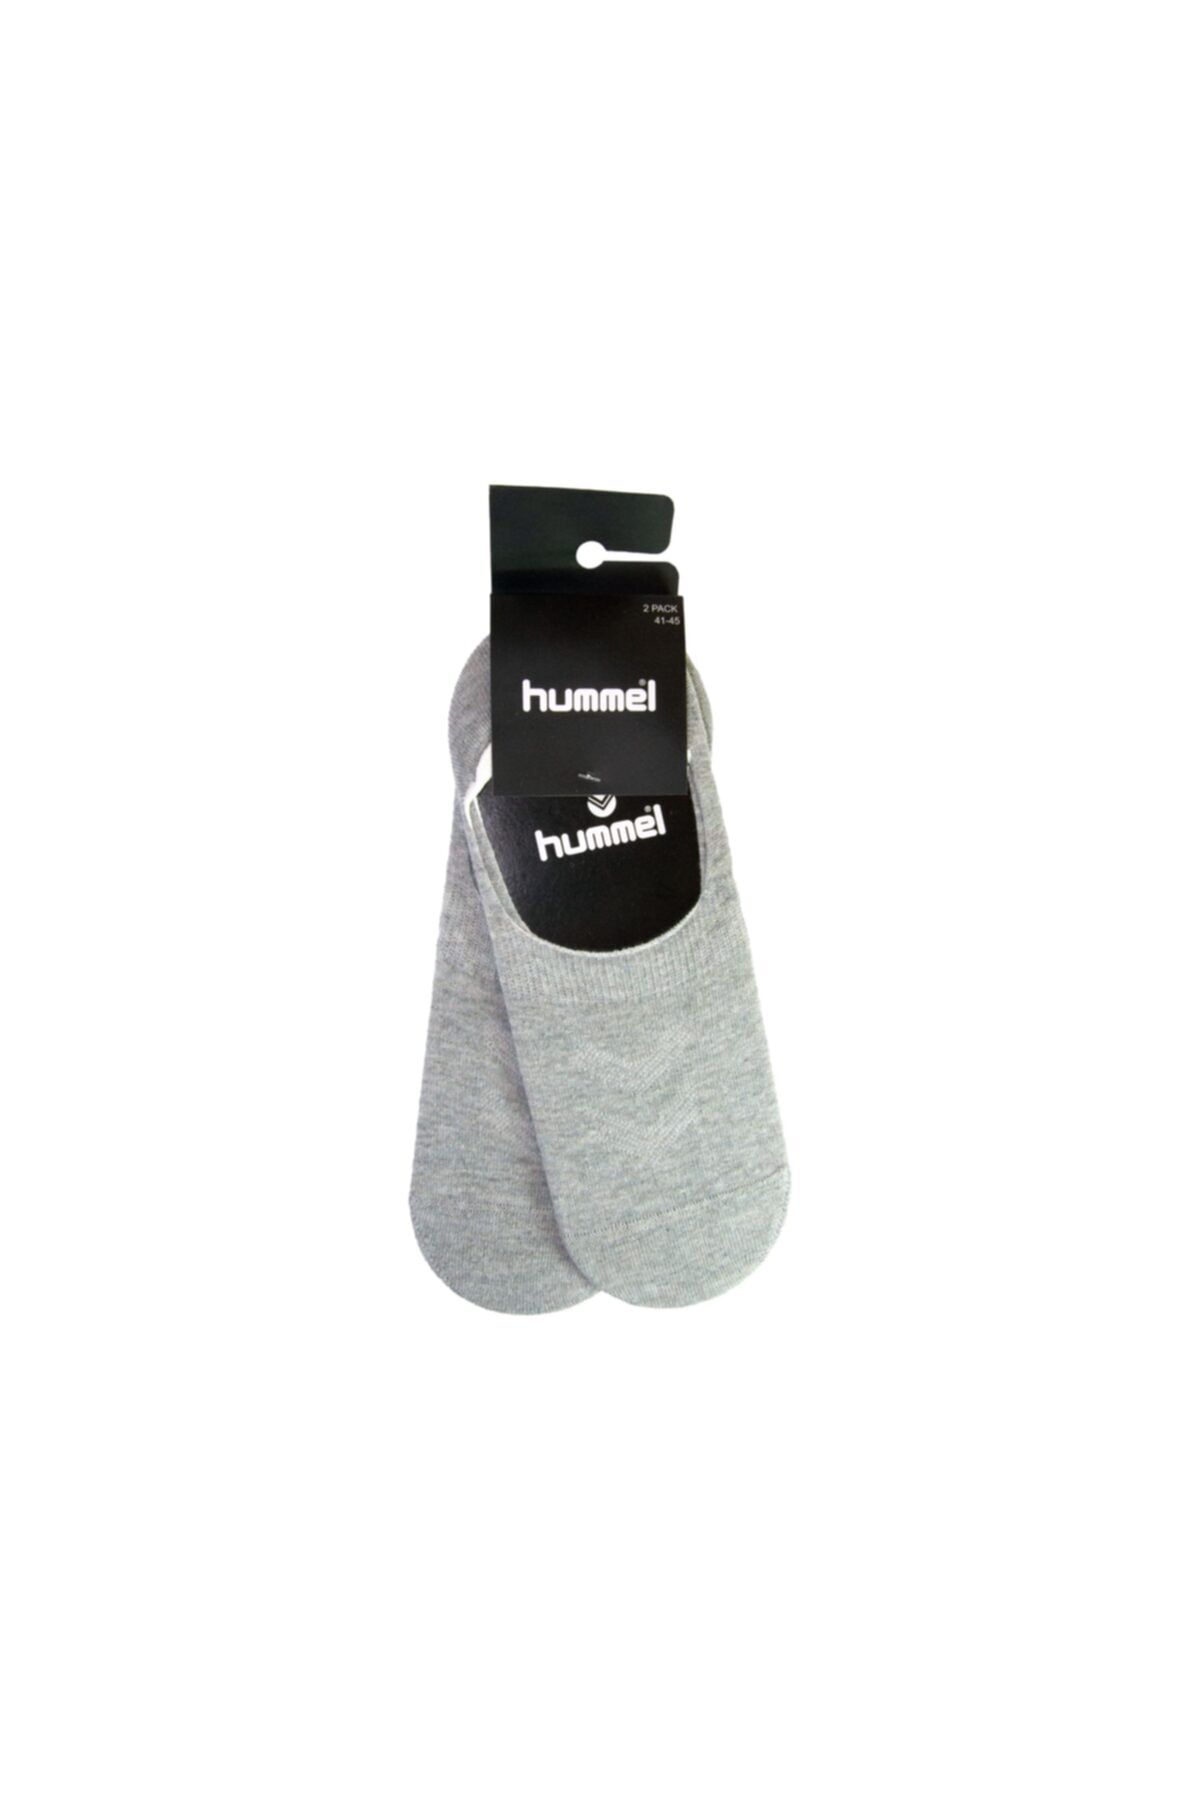 hummel Çorap Mini Low Size 970154 2064